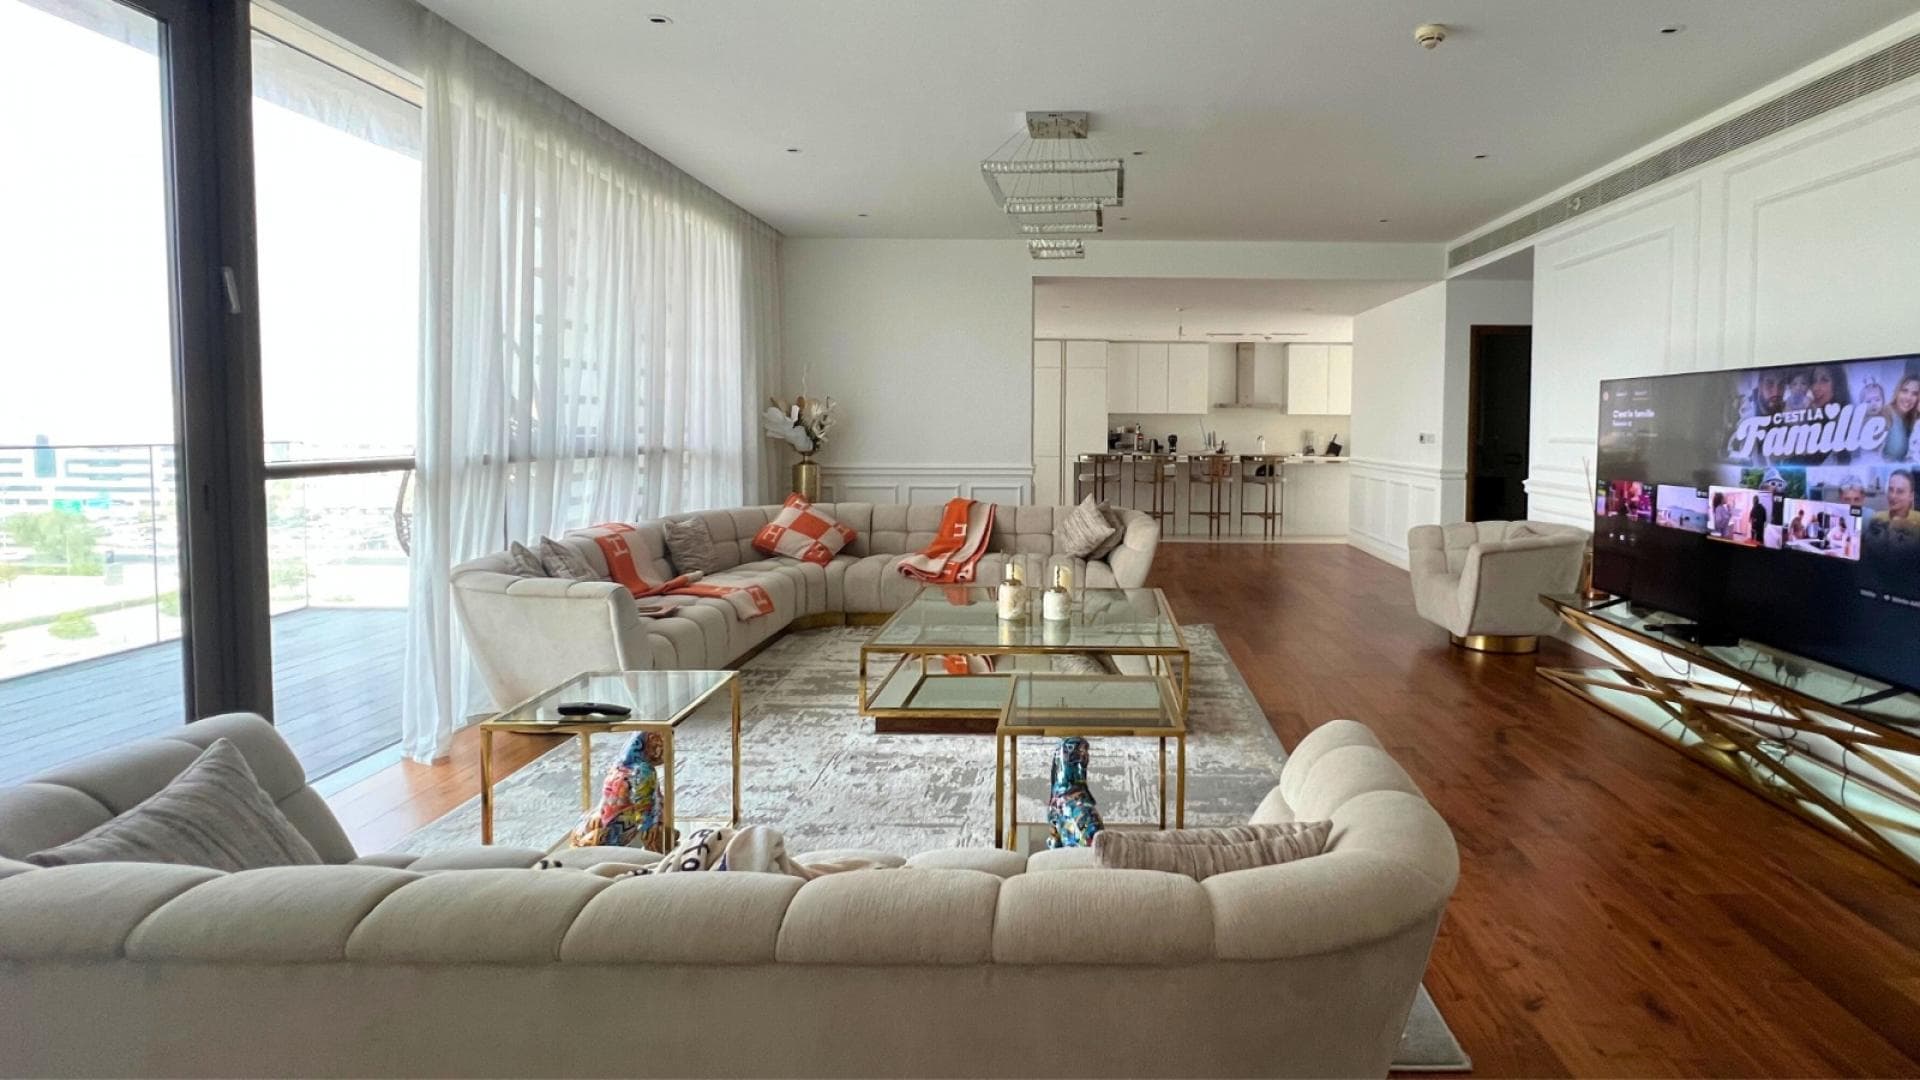 4 Bedroom Apartment For Rent 67 Beverly Park Ct Lp36377 13c90f540f2d6900.jpeg